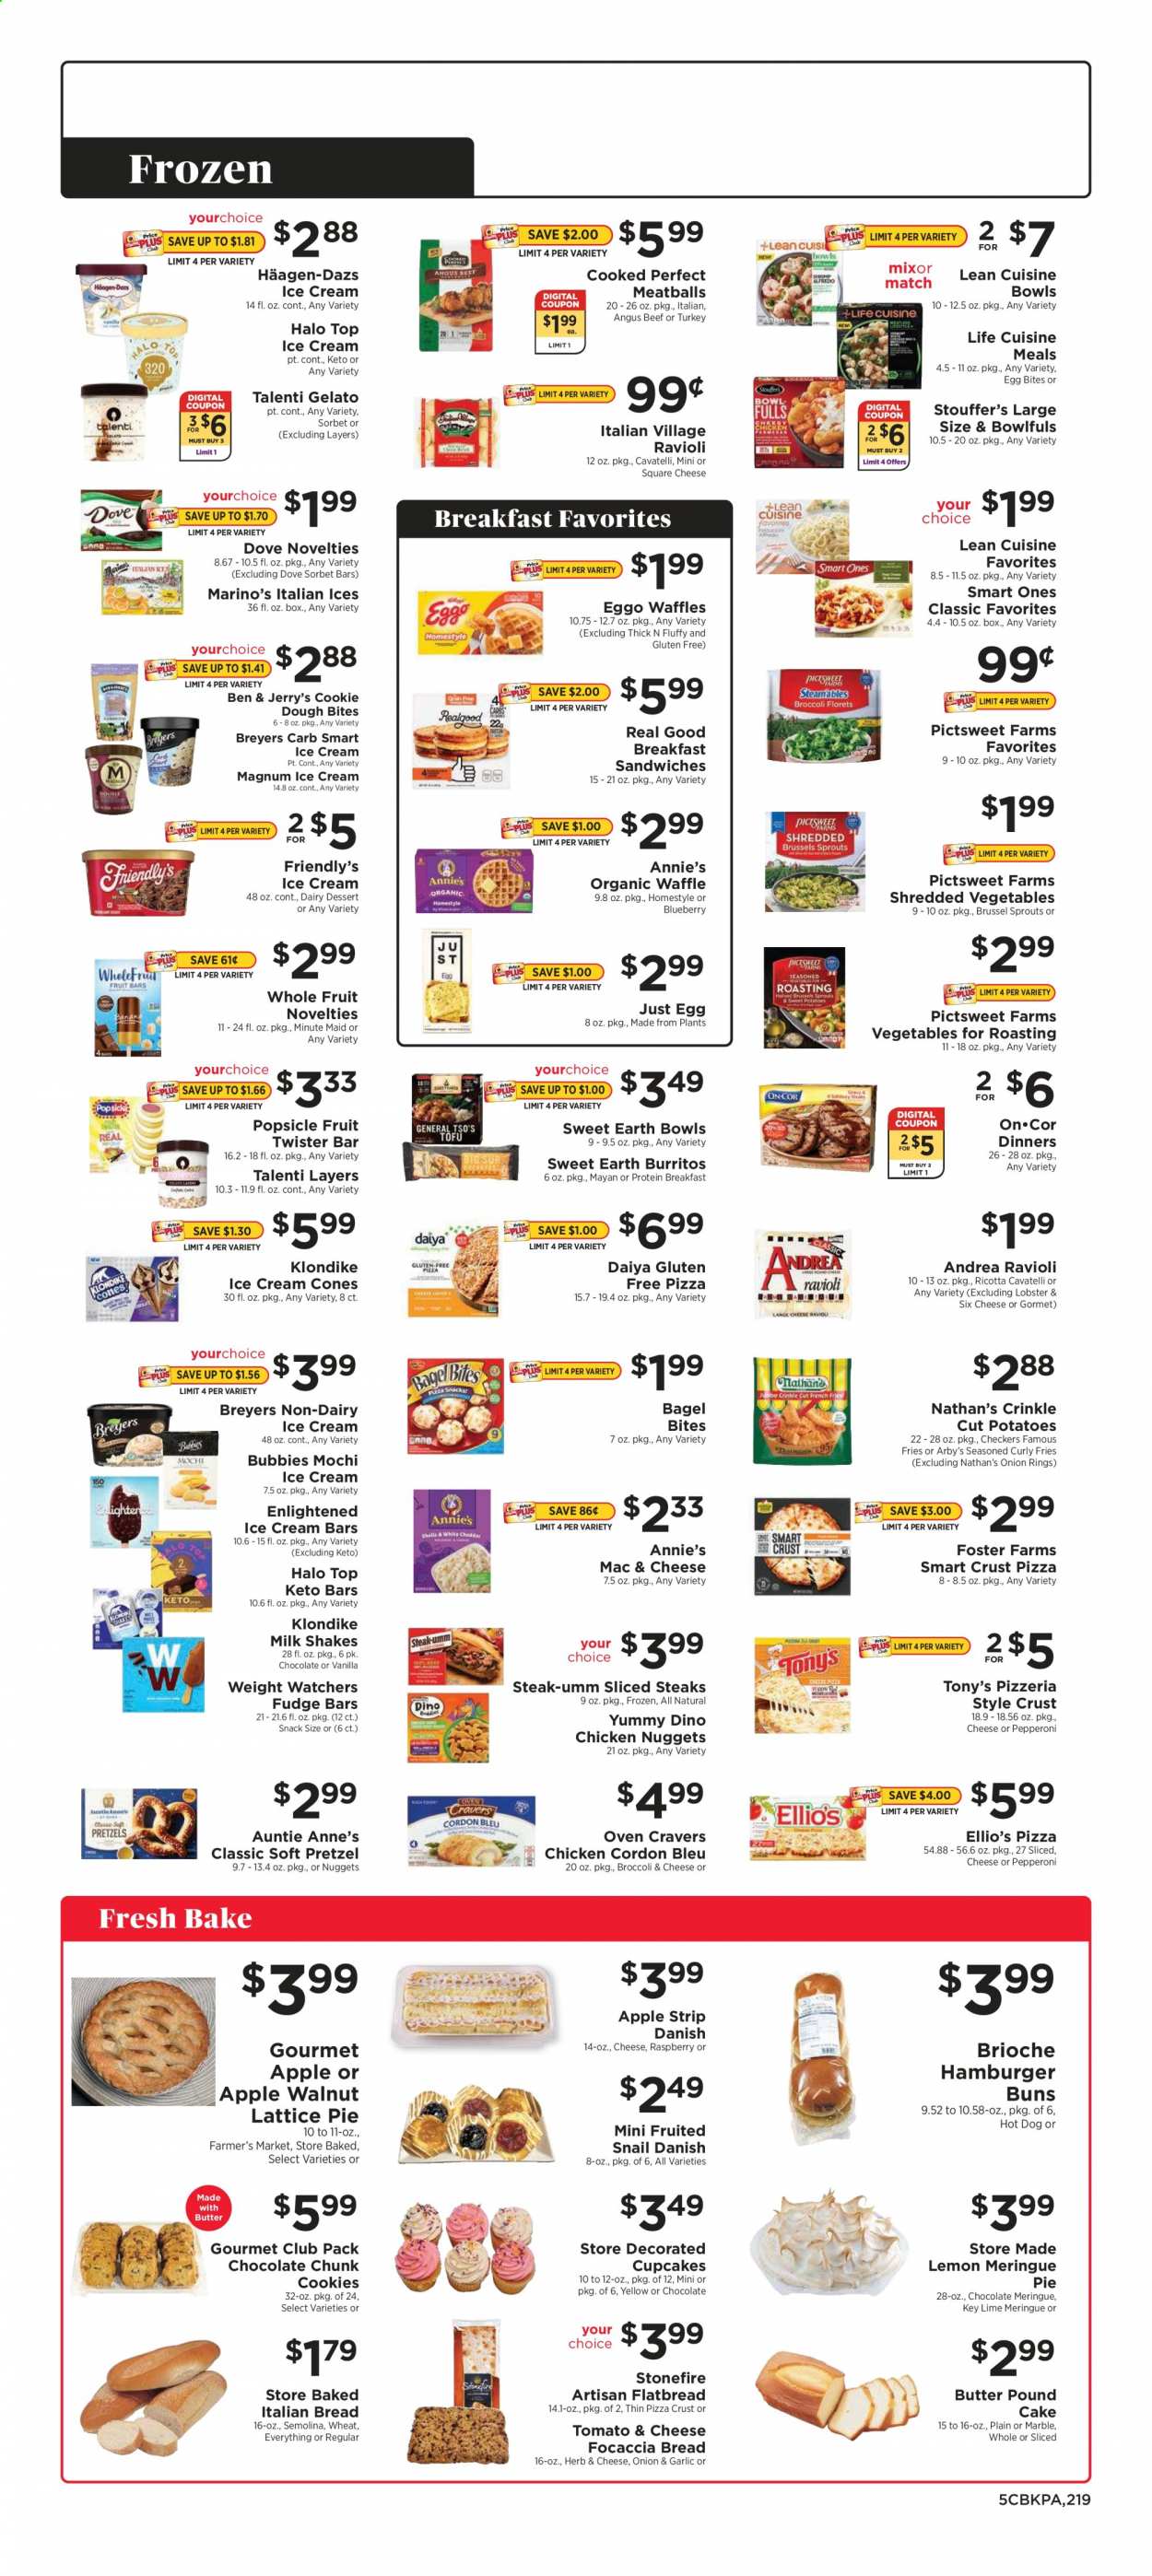 thumbnail - ShopRite Flyer - 06/06/2021 - 06/12/2021 - Sales products - bagels, bread, pretzels, cake, pie, buns, burger buns, brioche, focaccia, flatbread, cupcake, pound cake, broccoli, potatoes, brussel sprouts, lobster, ravioli, hot dog, pizza, onion rings, meatballs, sandwich, nuggets, chicken nuggets, burrito, Lean Cuisine, Annie's, milk, shake, eggs, Magnum, ice cream, ice cream bars, Häagen-Dazs, Ben & Jerry's, Talenti Gelato, Enlightened lce Cream, Friendly's Ice Cream, gelato, cordon bleu, curly potato fries, potato fries, cookie dough, cookies, fudge, snack, semolina, herbs, fruit punch, beef meat, steak, Dove. Page 7.